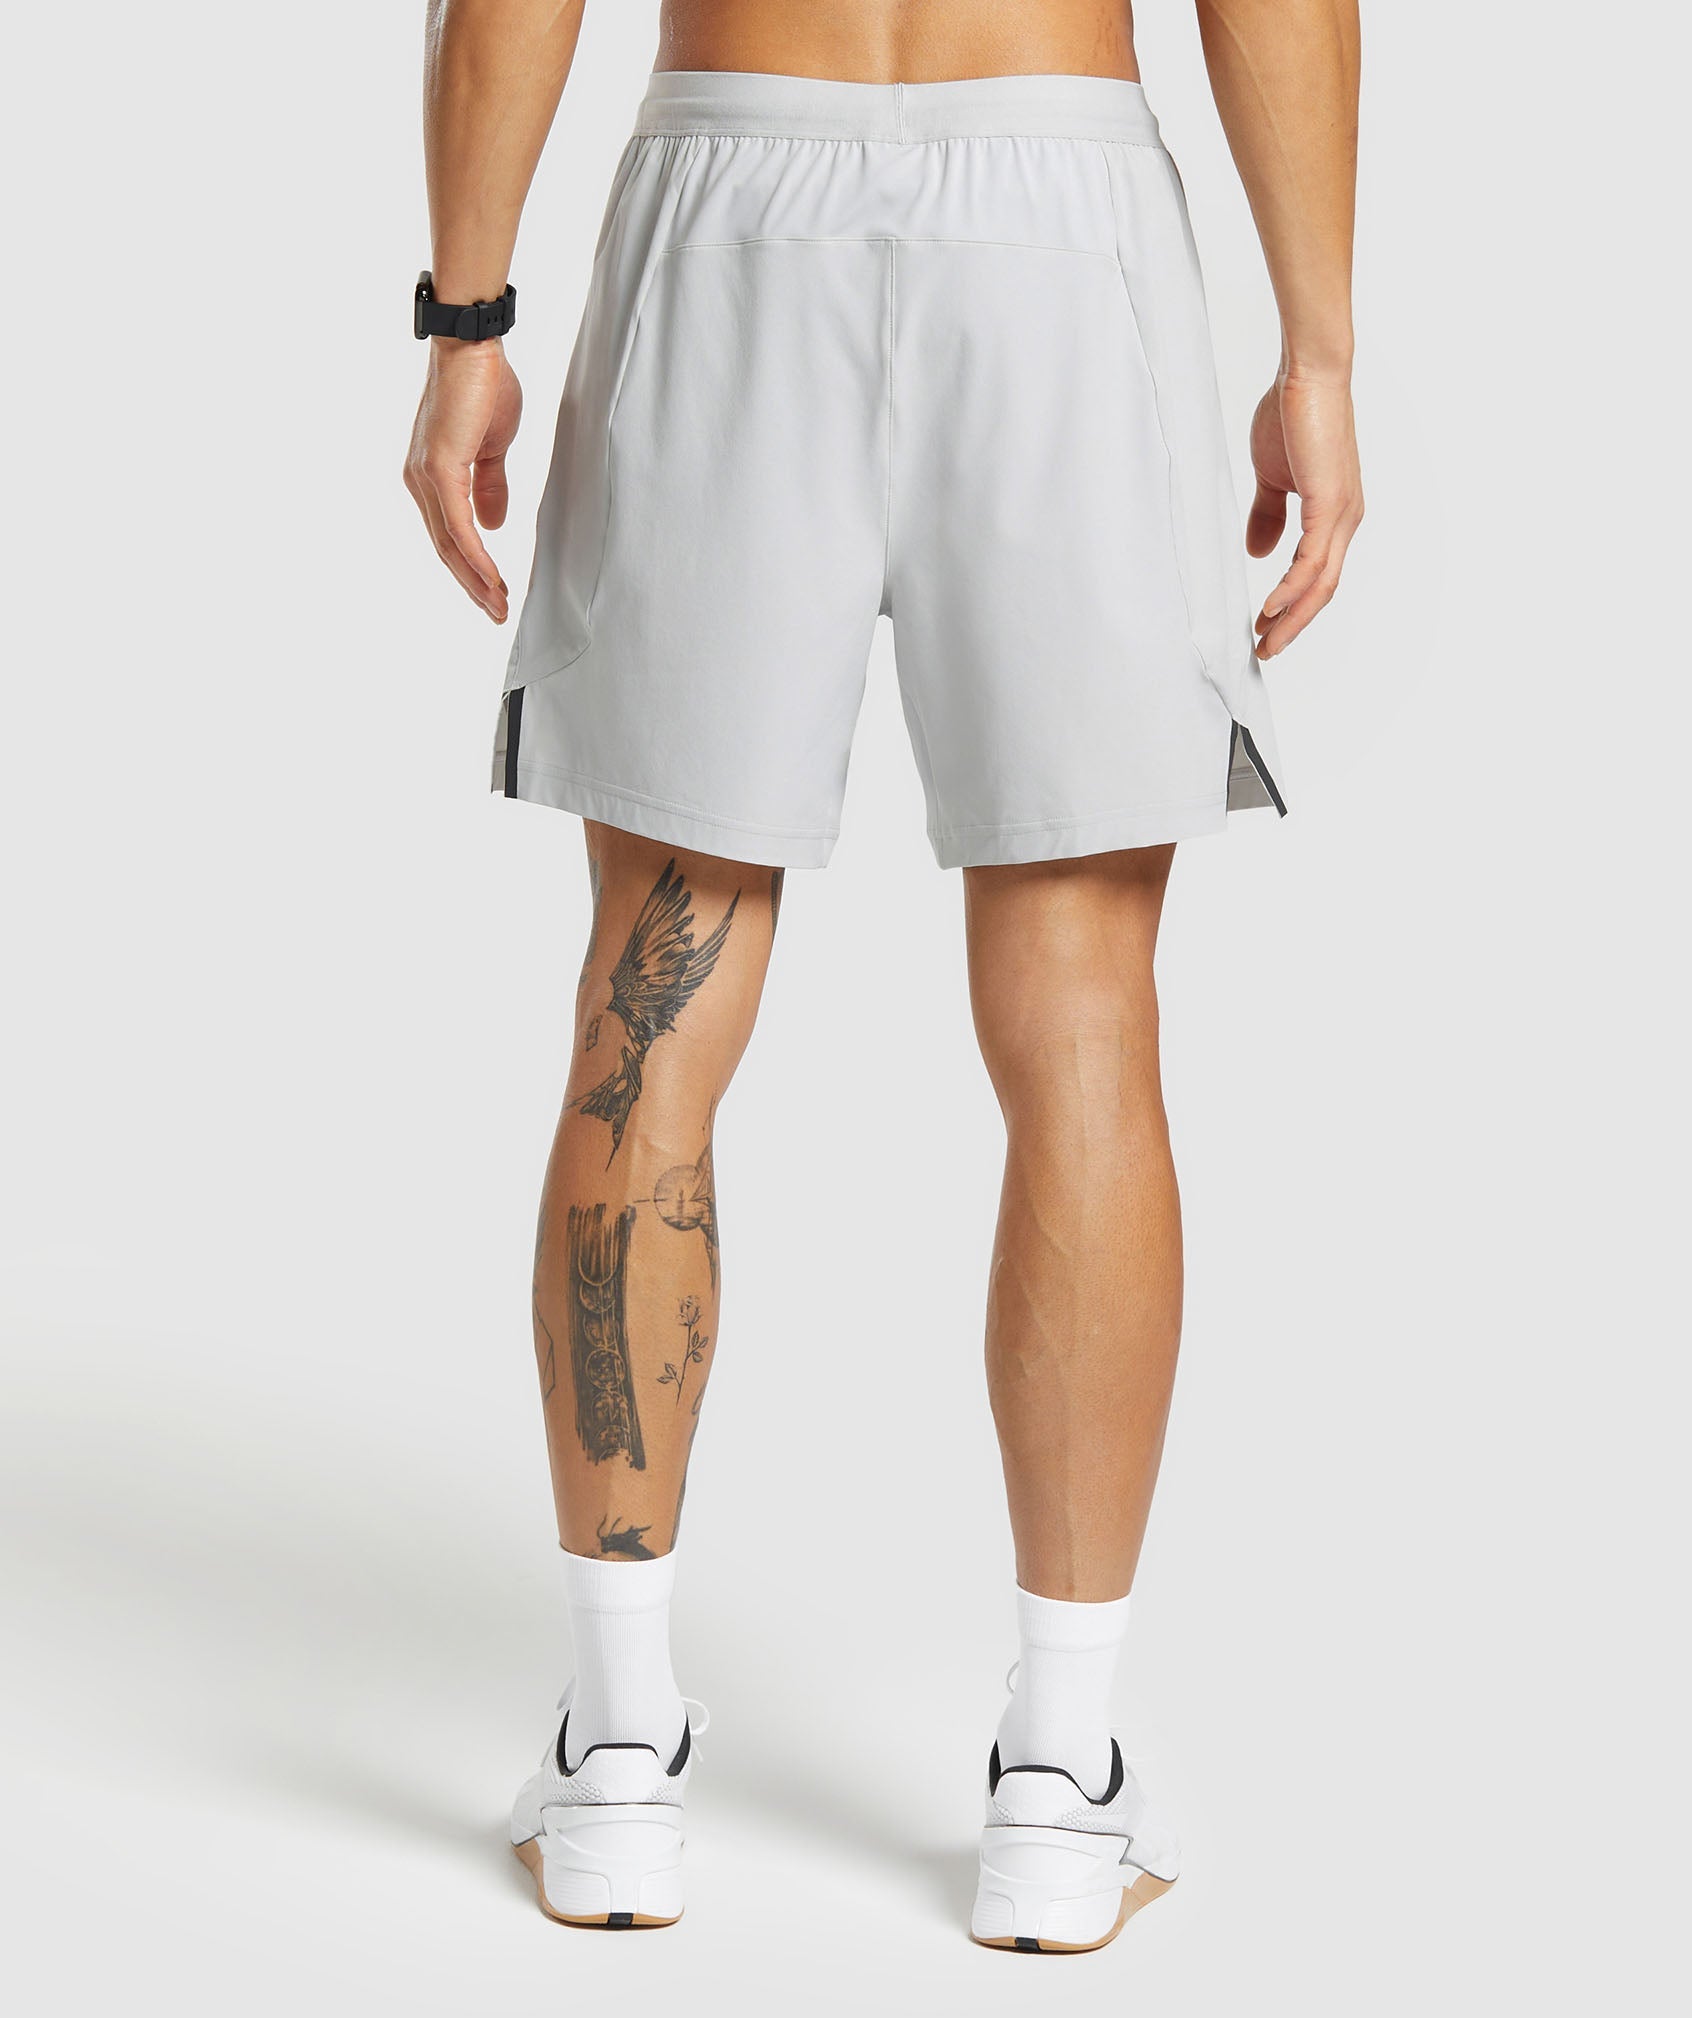 Apex 7" Hybrid Shorts in Light Grey - view 2